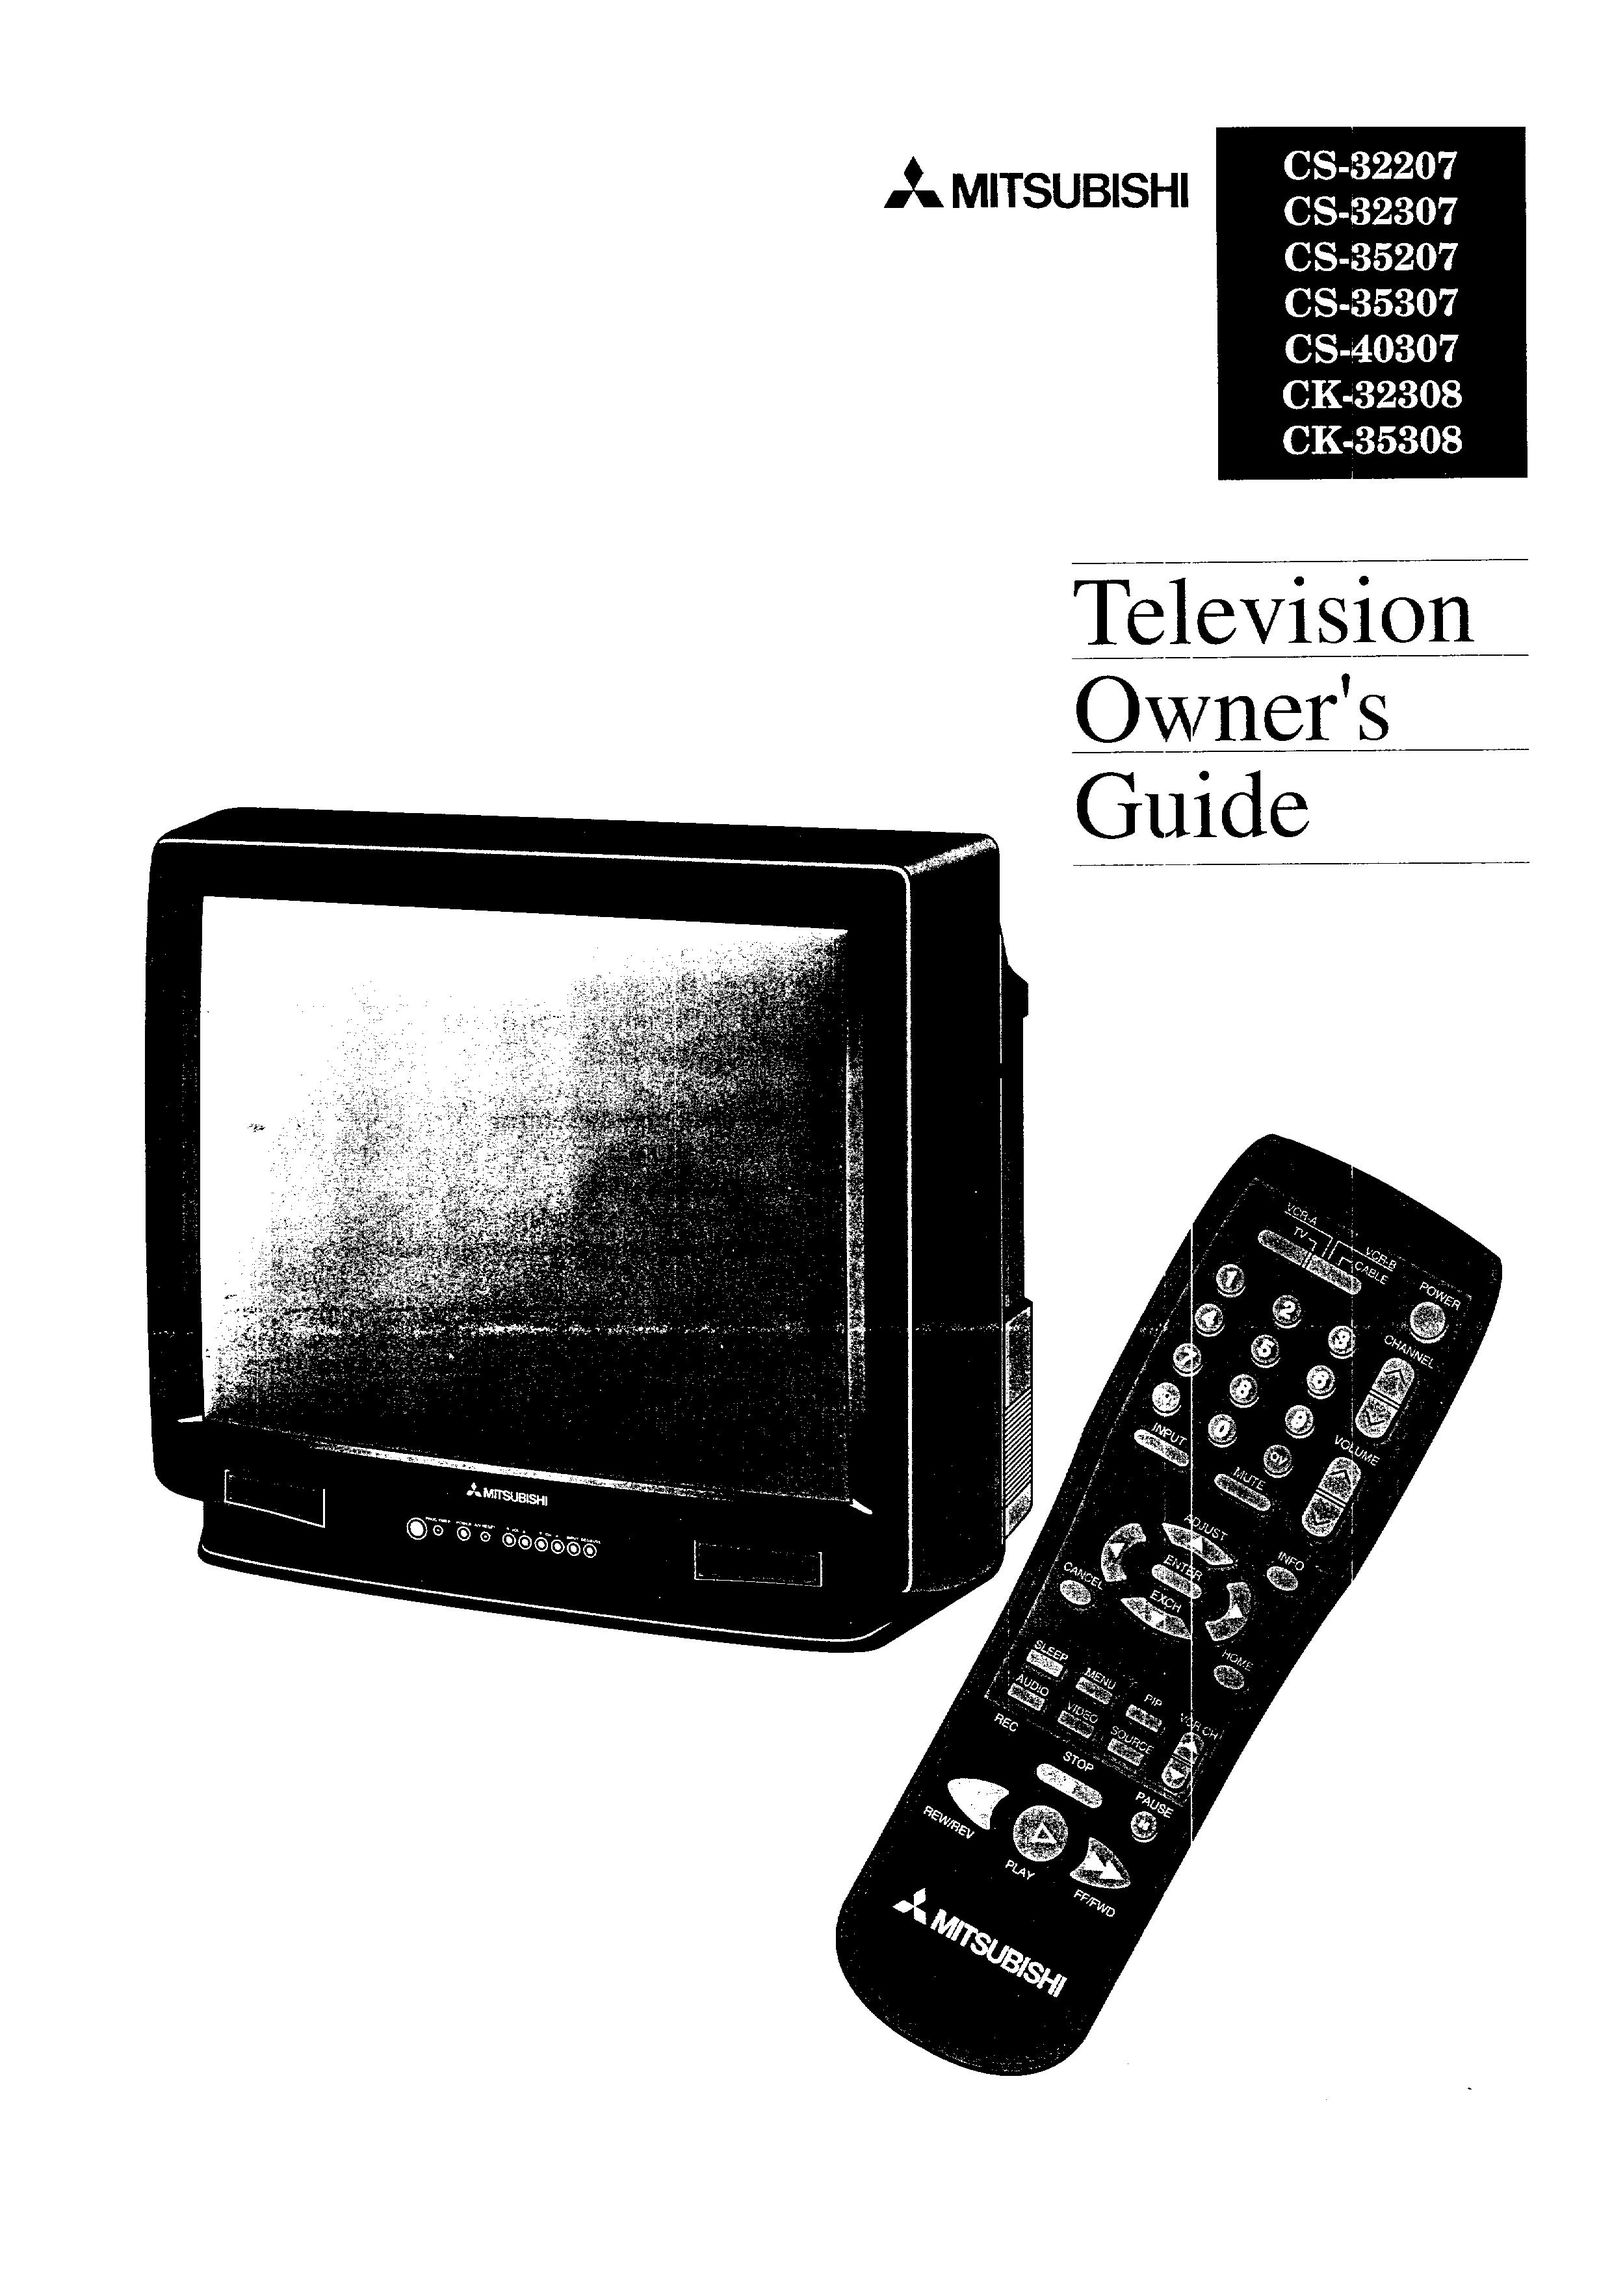 Mitsubishi Electronics CS-40307 CRT Television User Manual